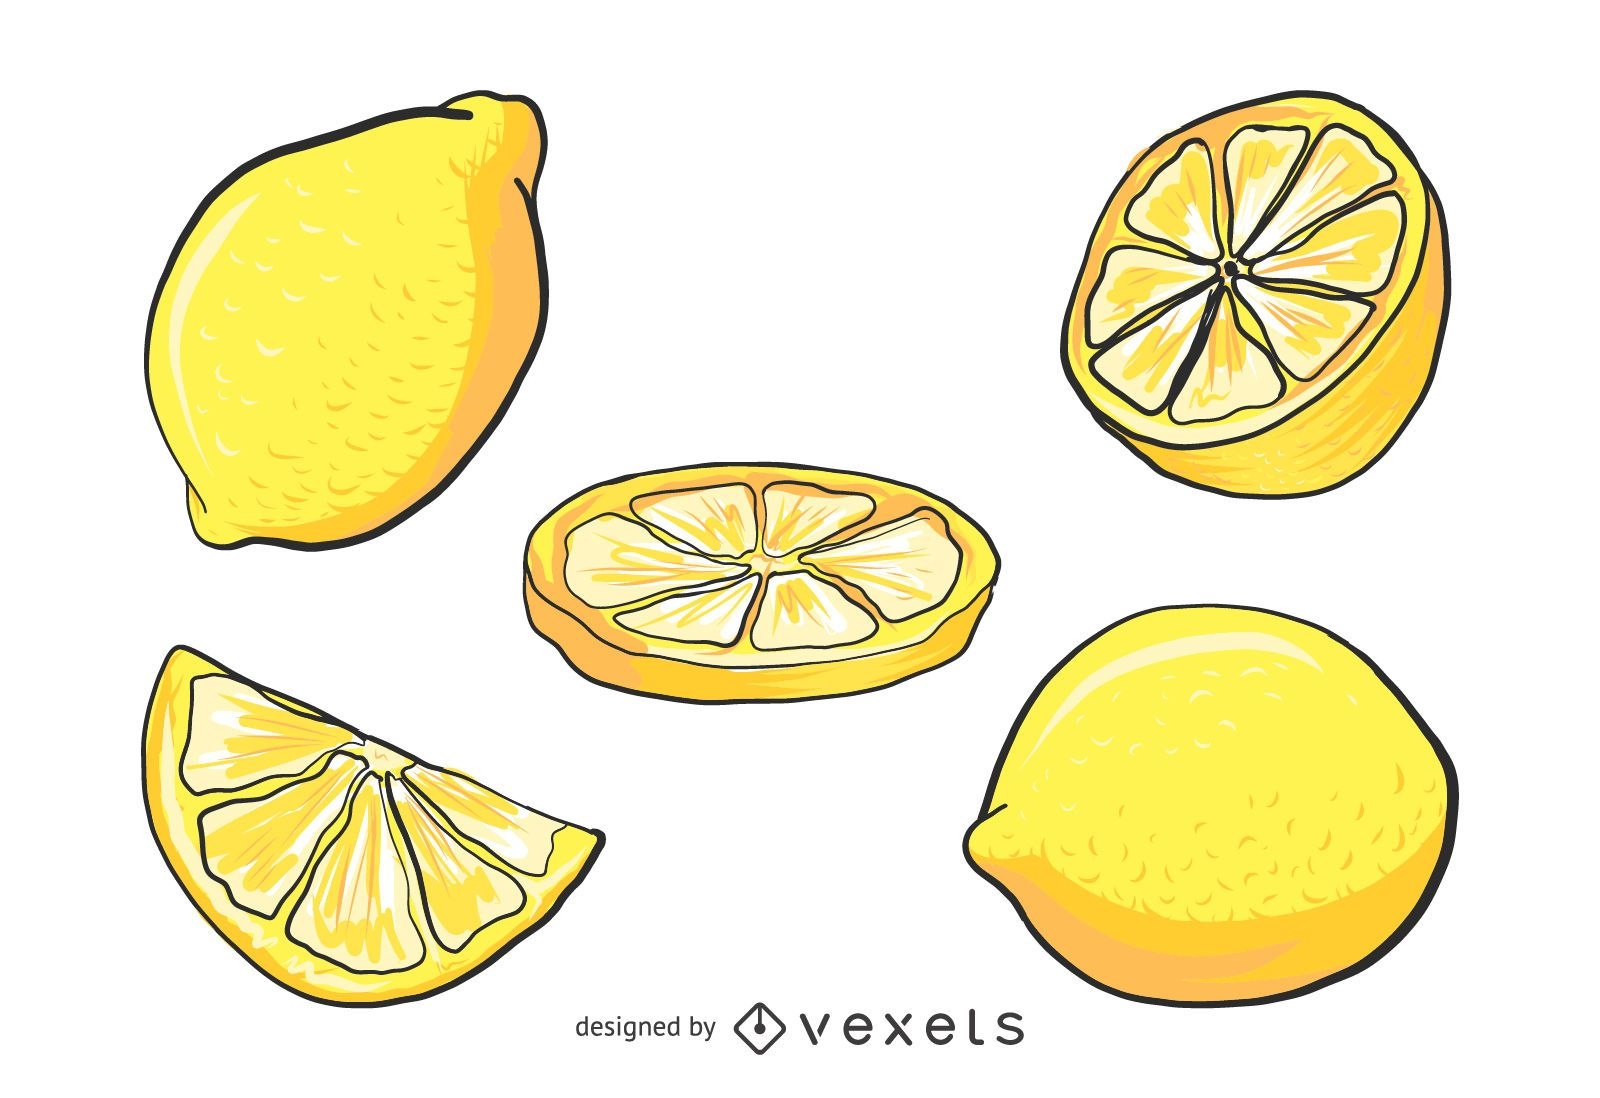 Lemon illustration set